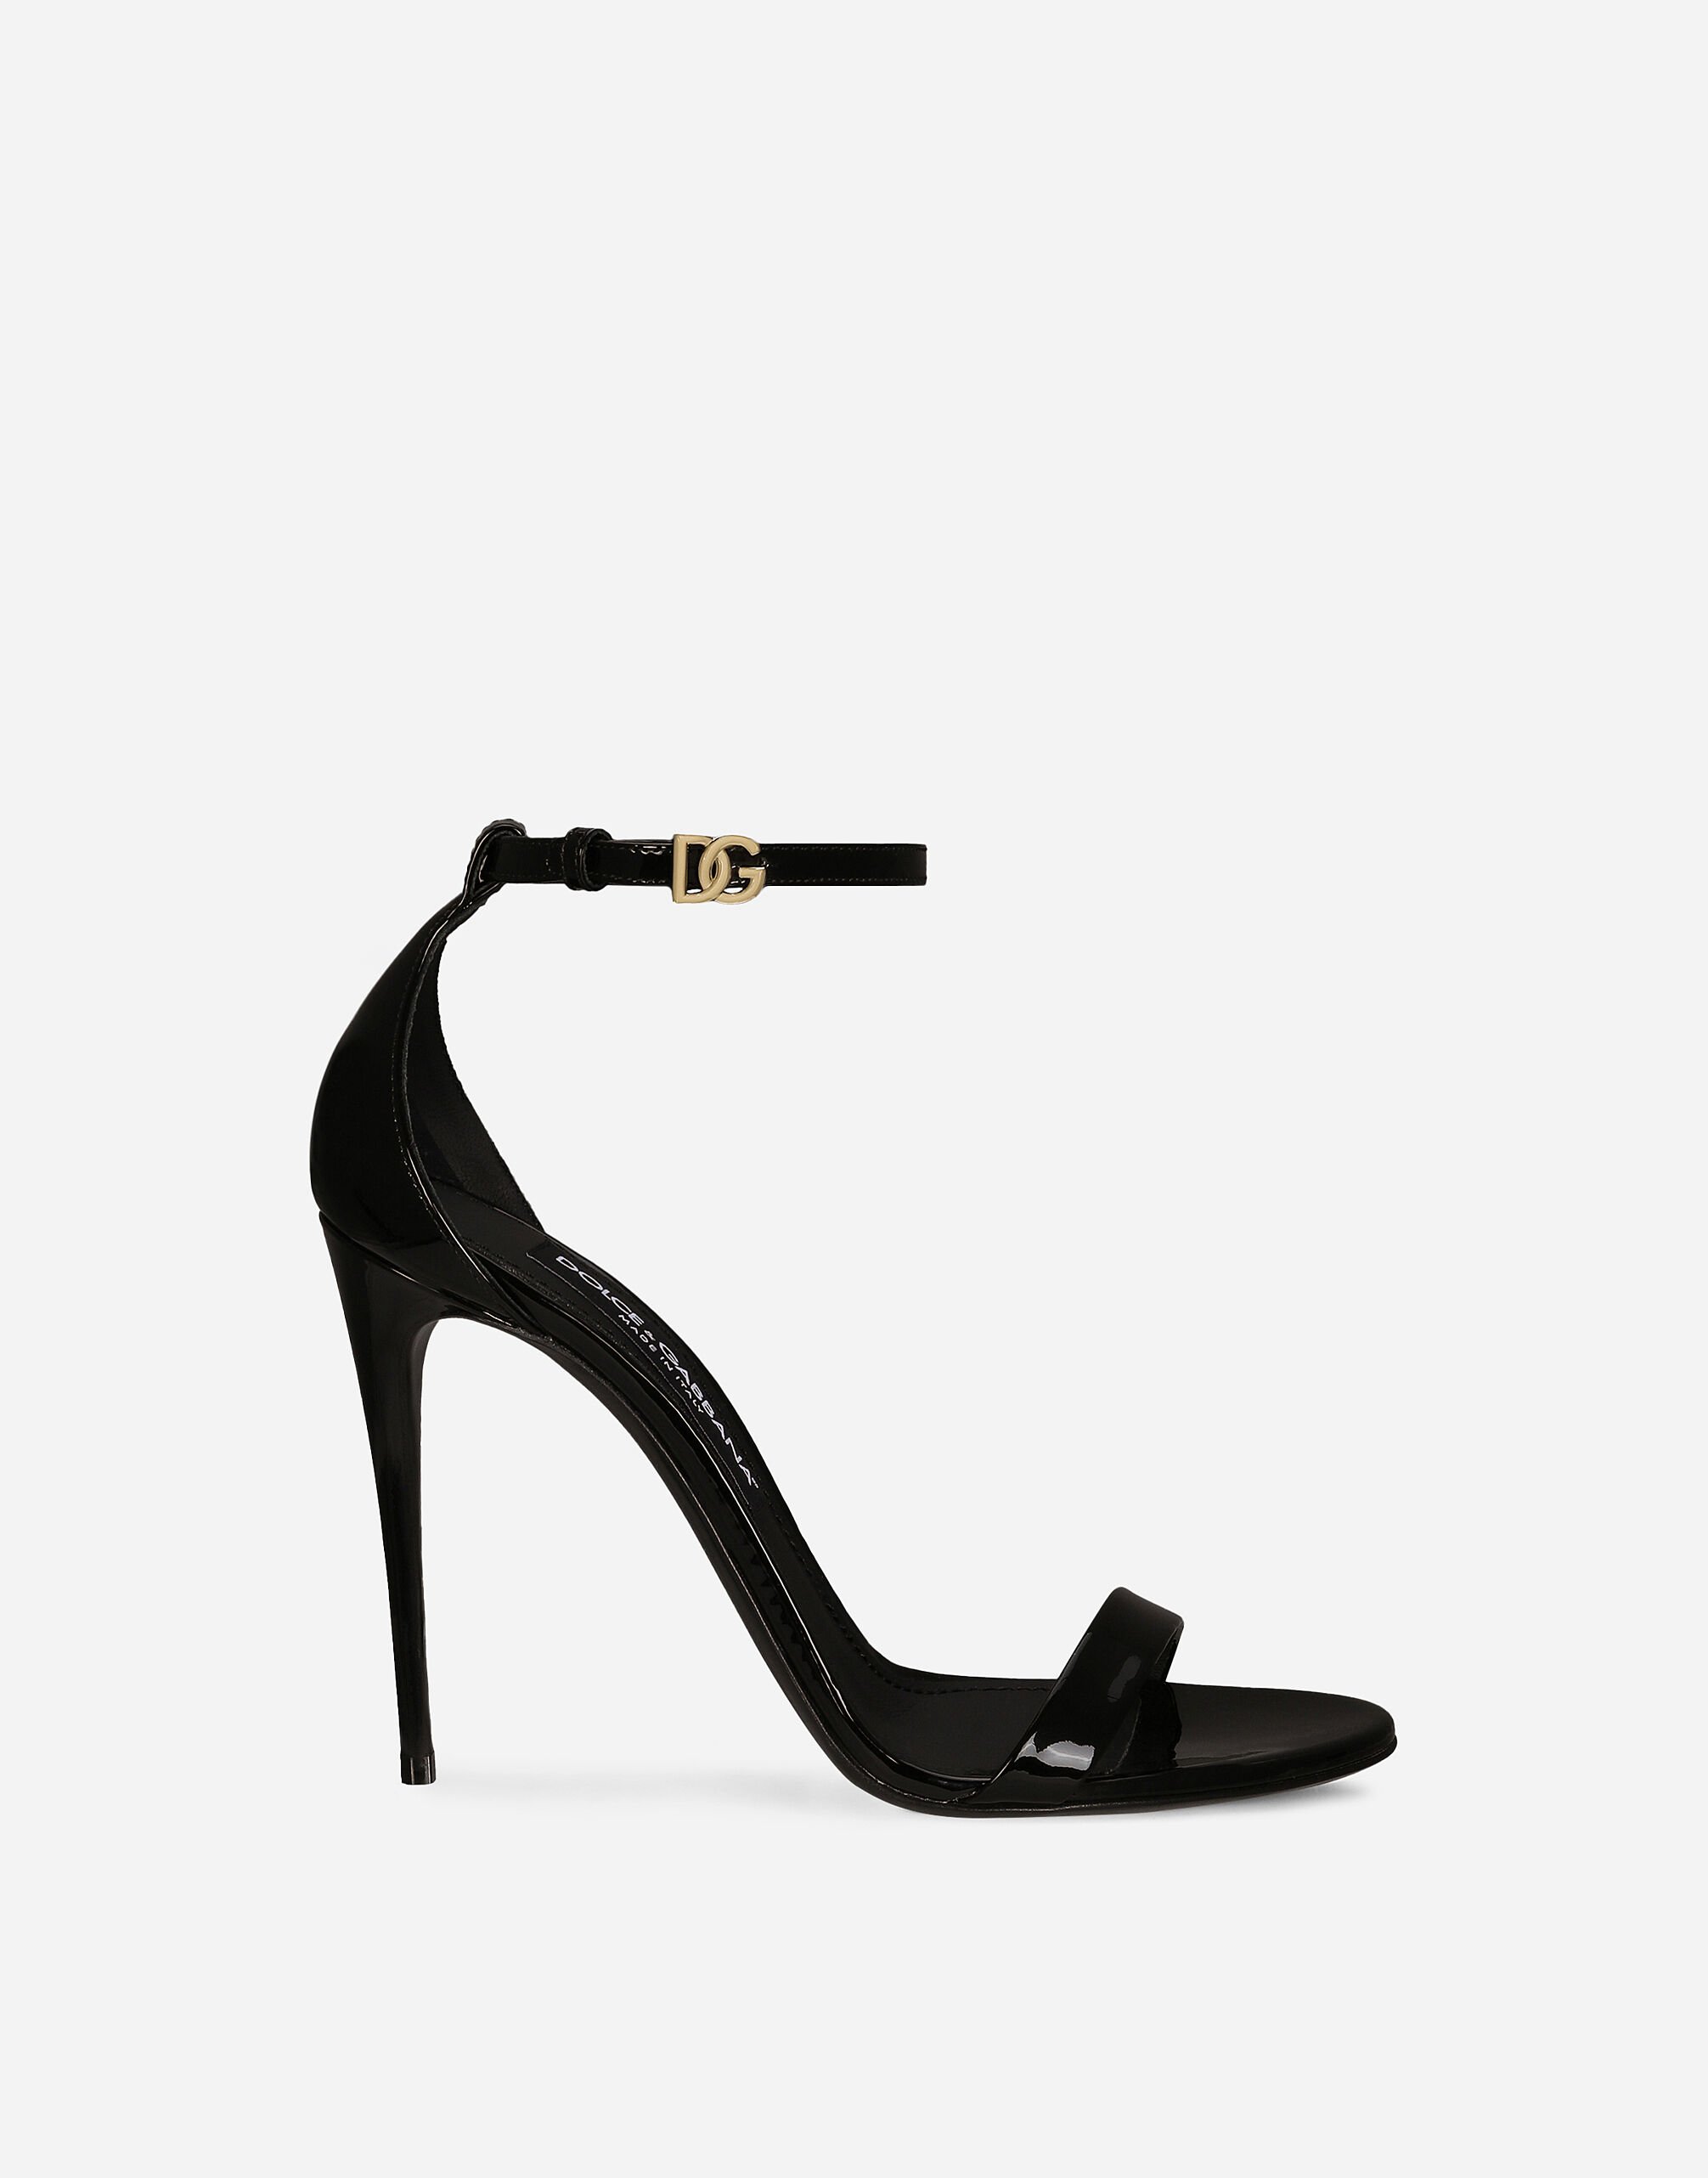 Dolce & Gabbana Patent leather sandals 405 Devotion MKUPLIP0009